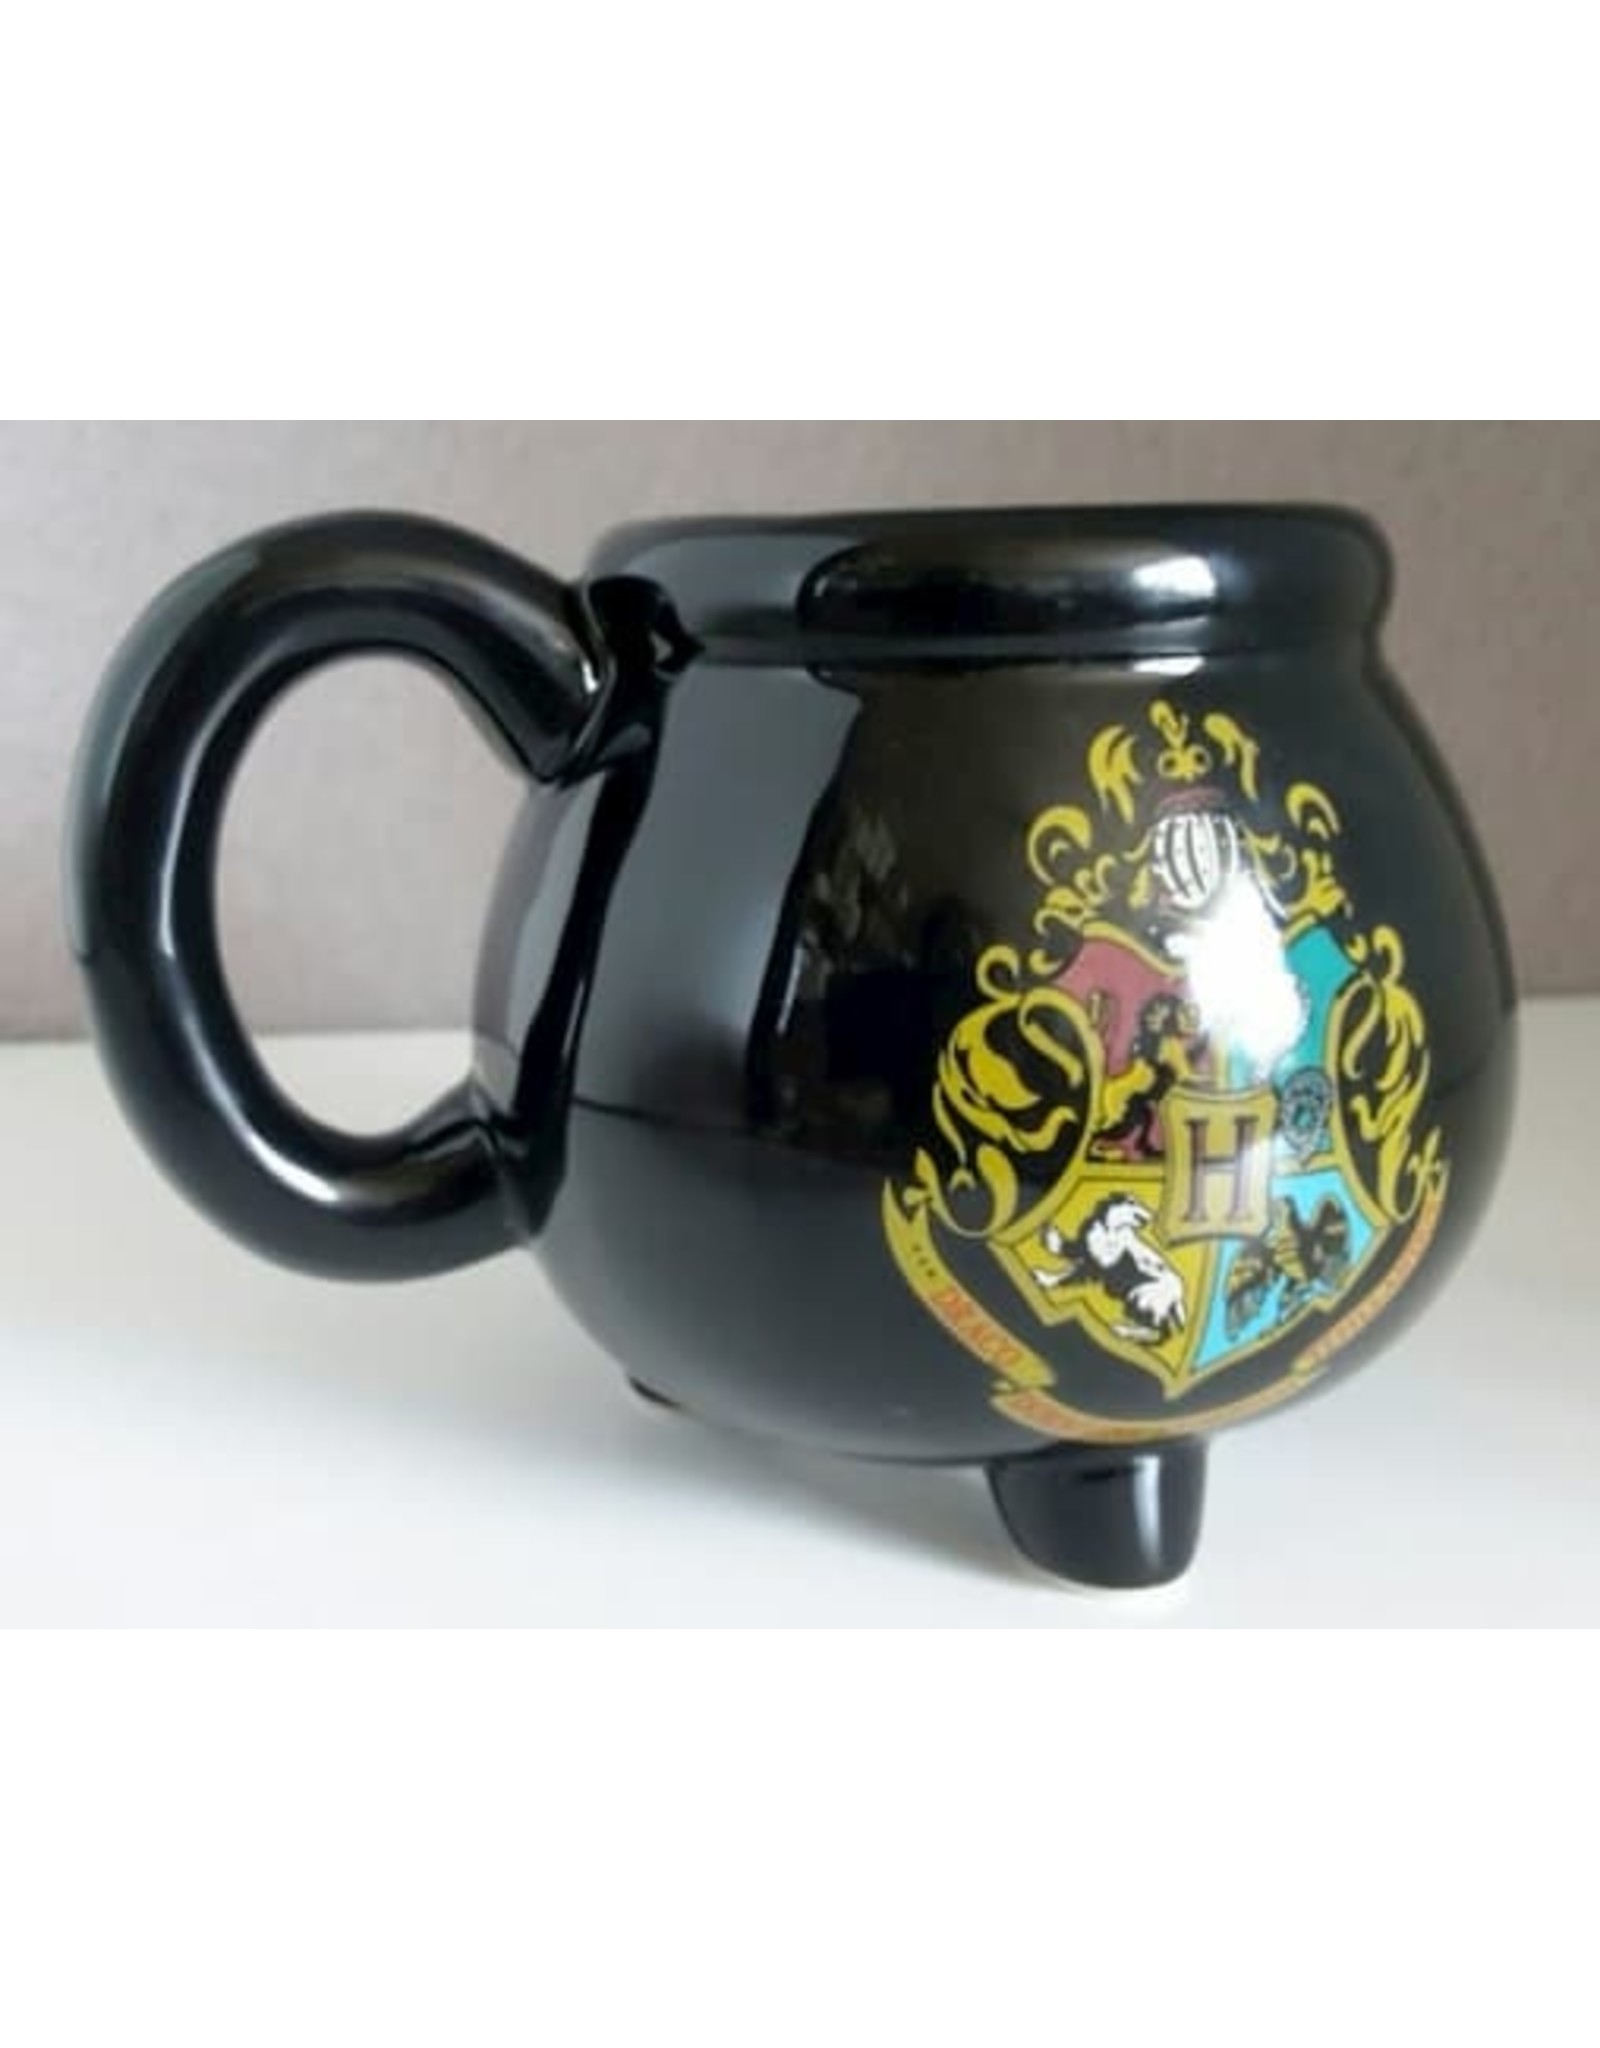 Harry Potter Tankards and goblets - Harry Potter Cauldron mug - ceramic